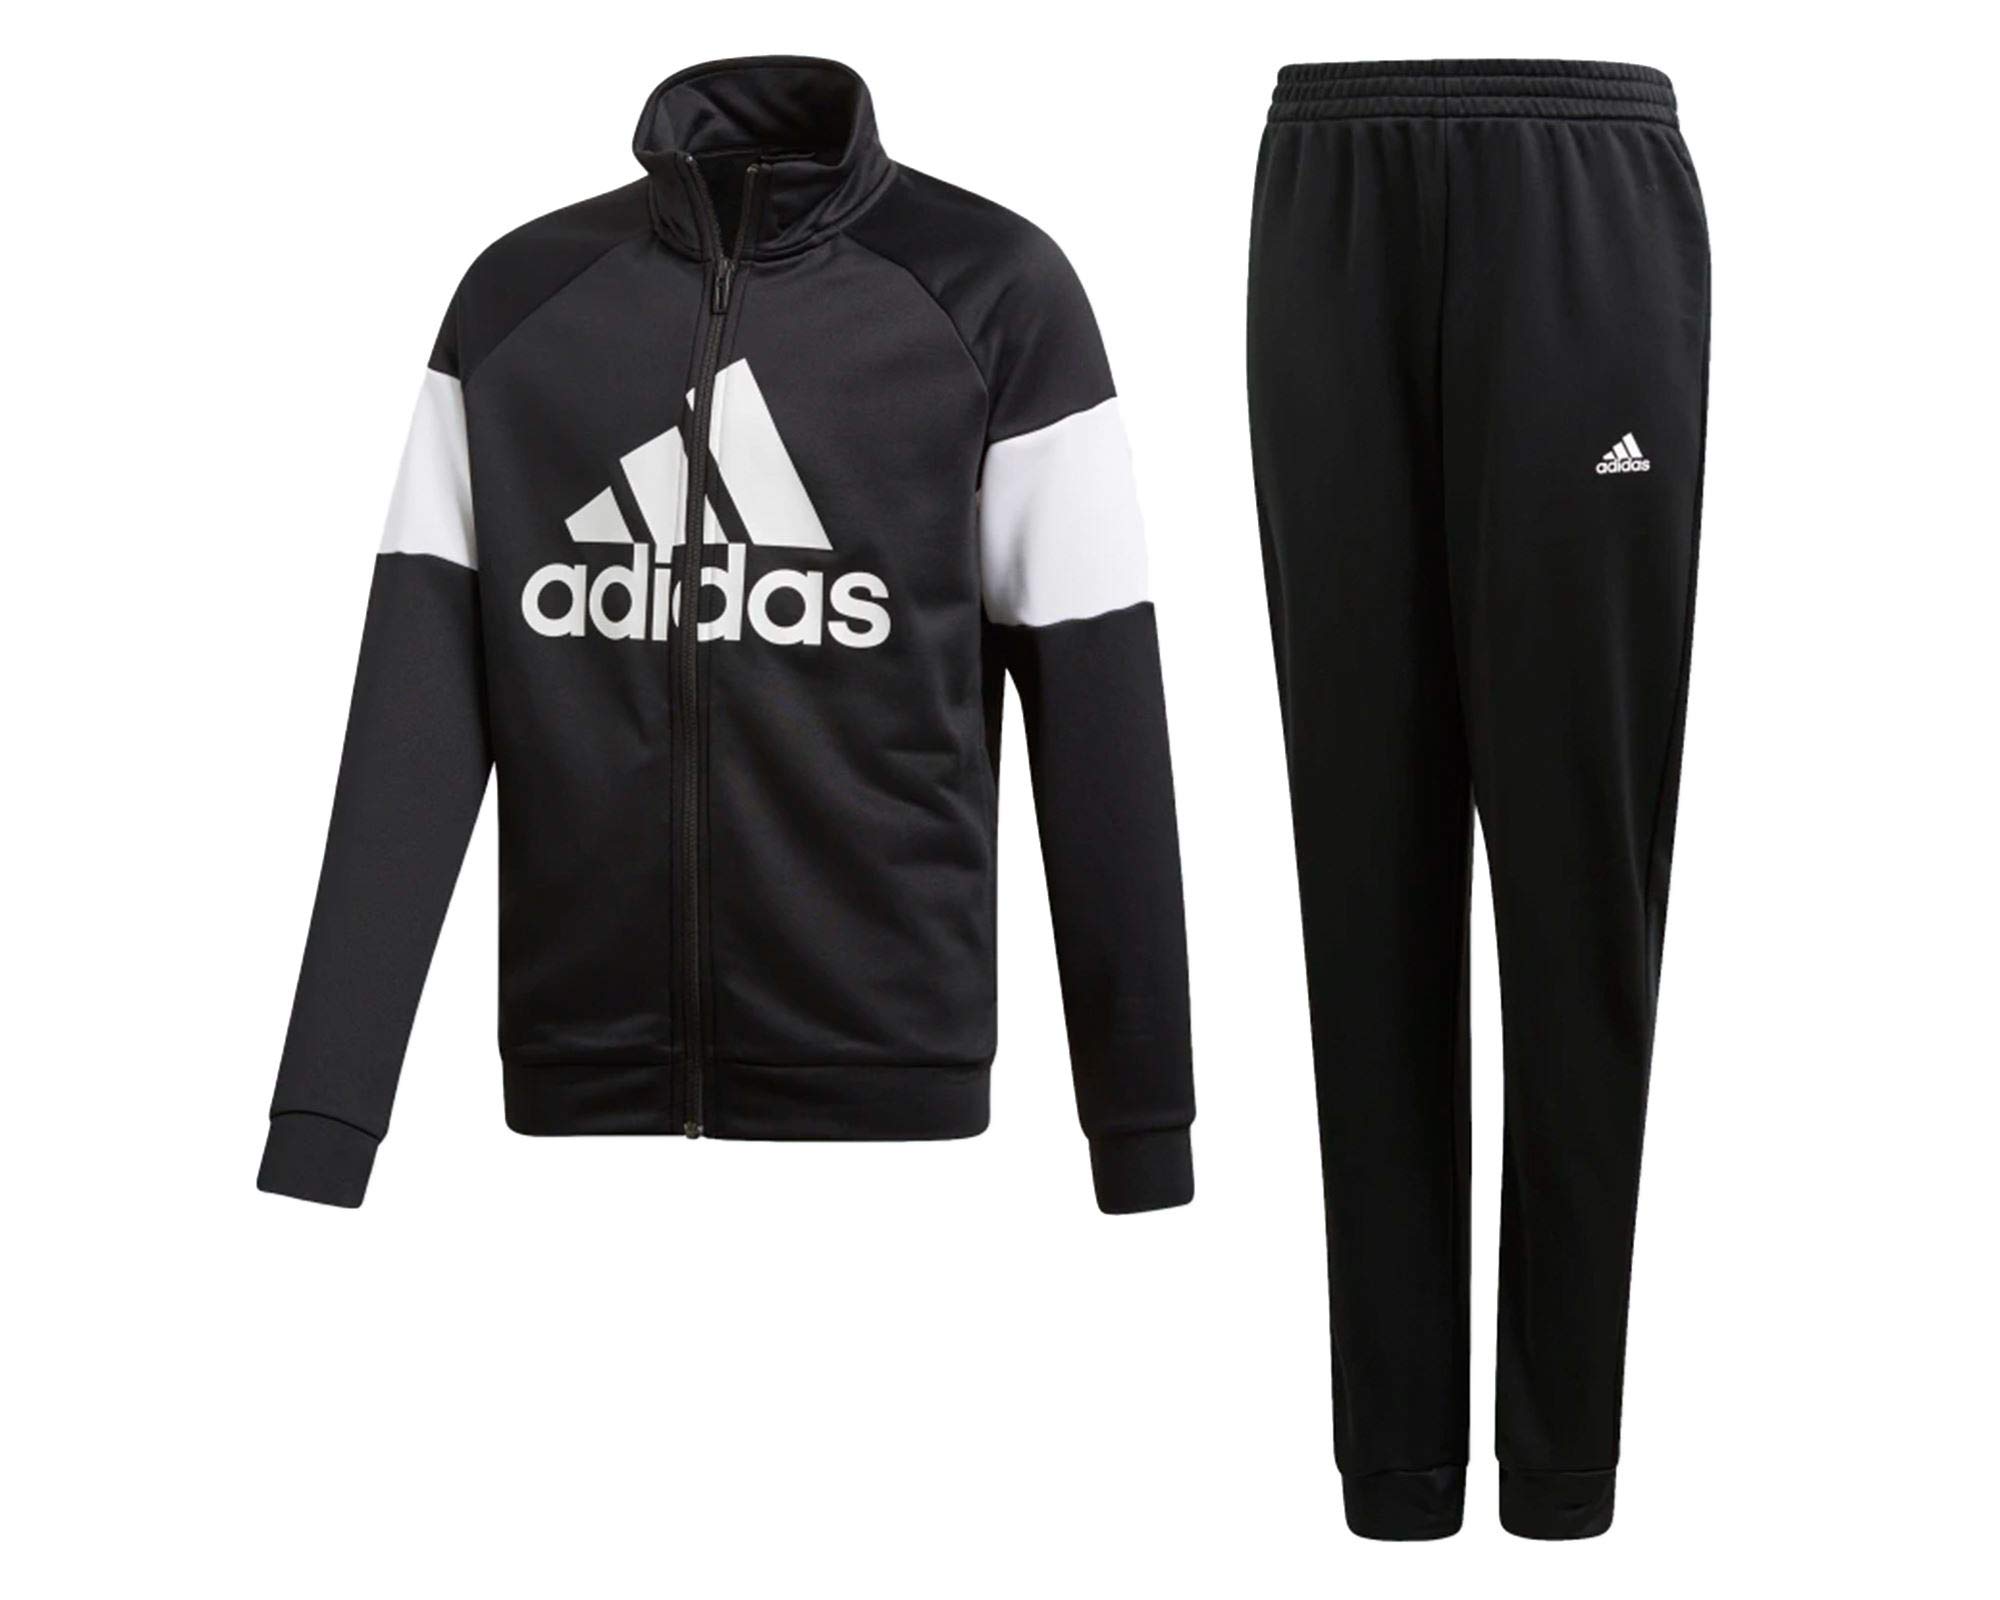 adidas Jungen Badge of Sport Trainingsanzug, Top:Black Bottom:Black/White, 176